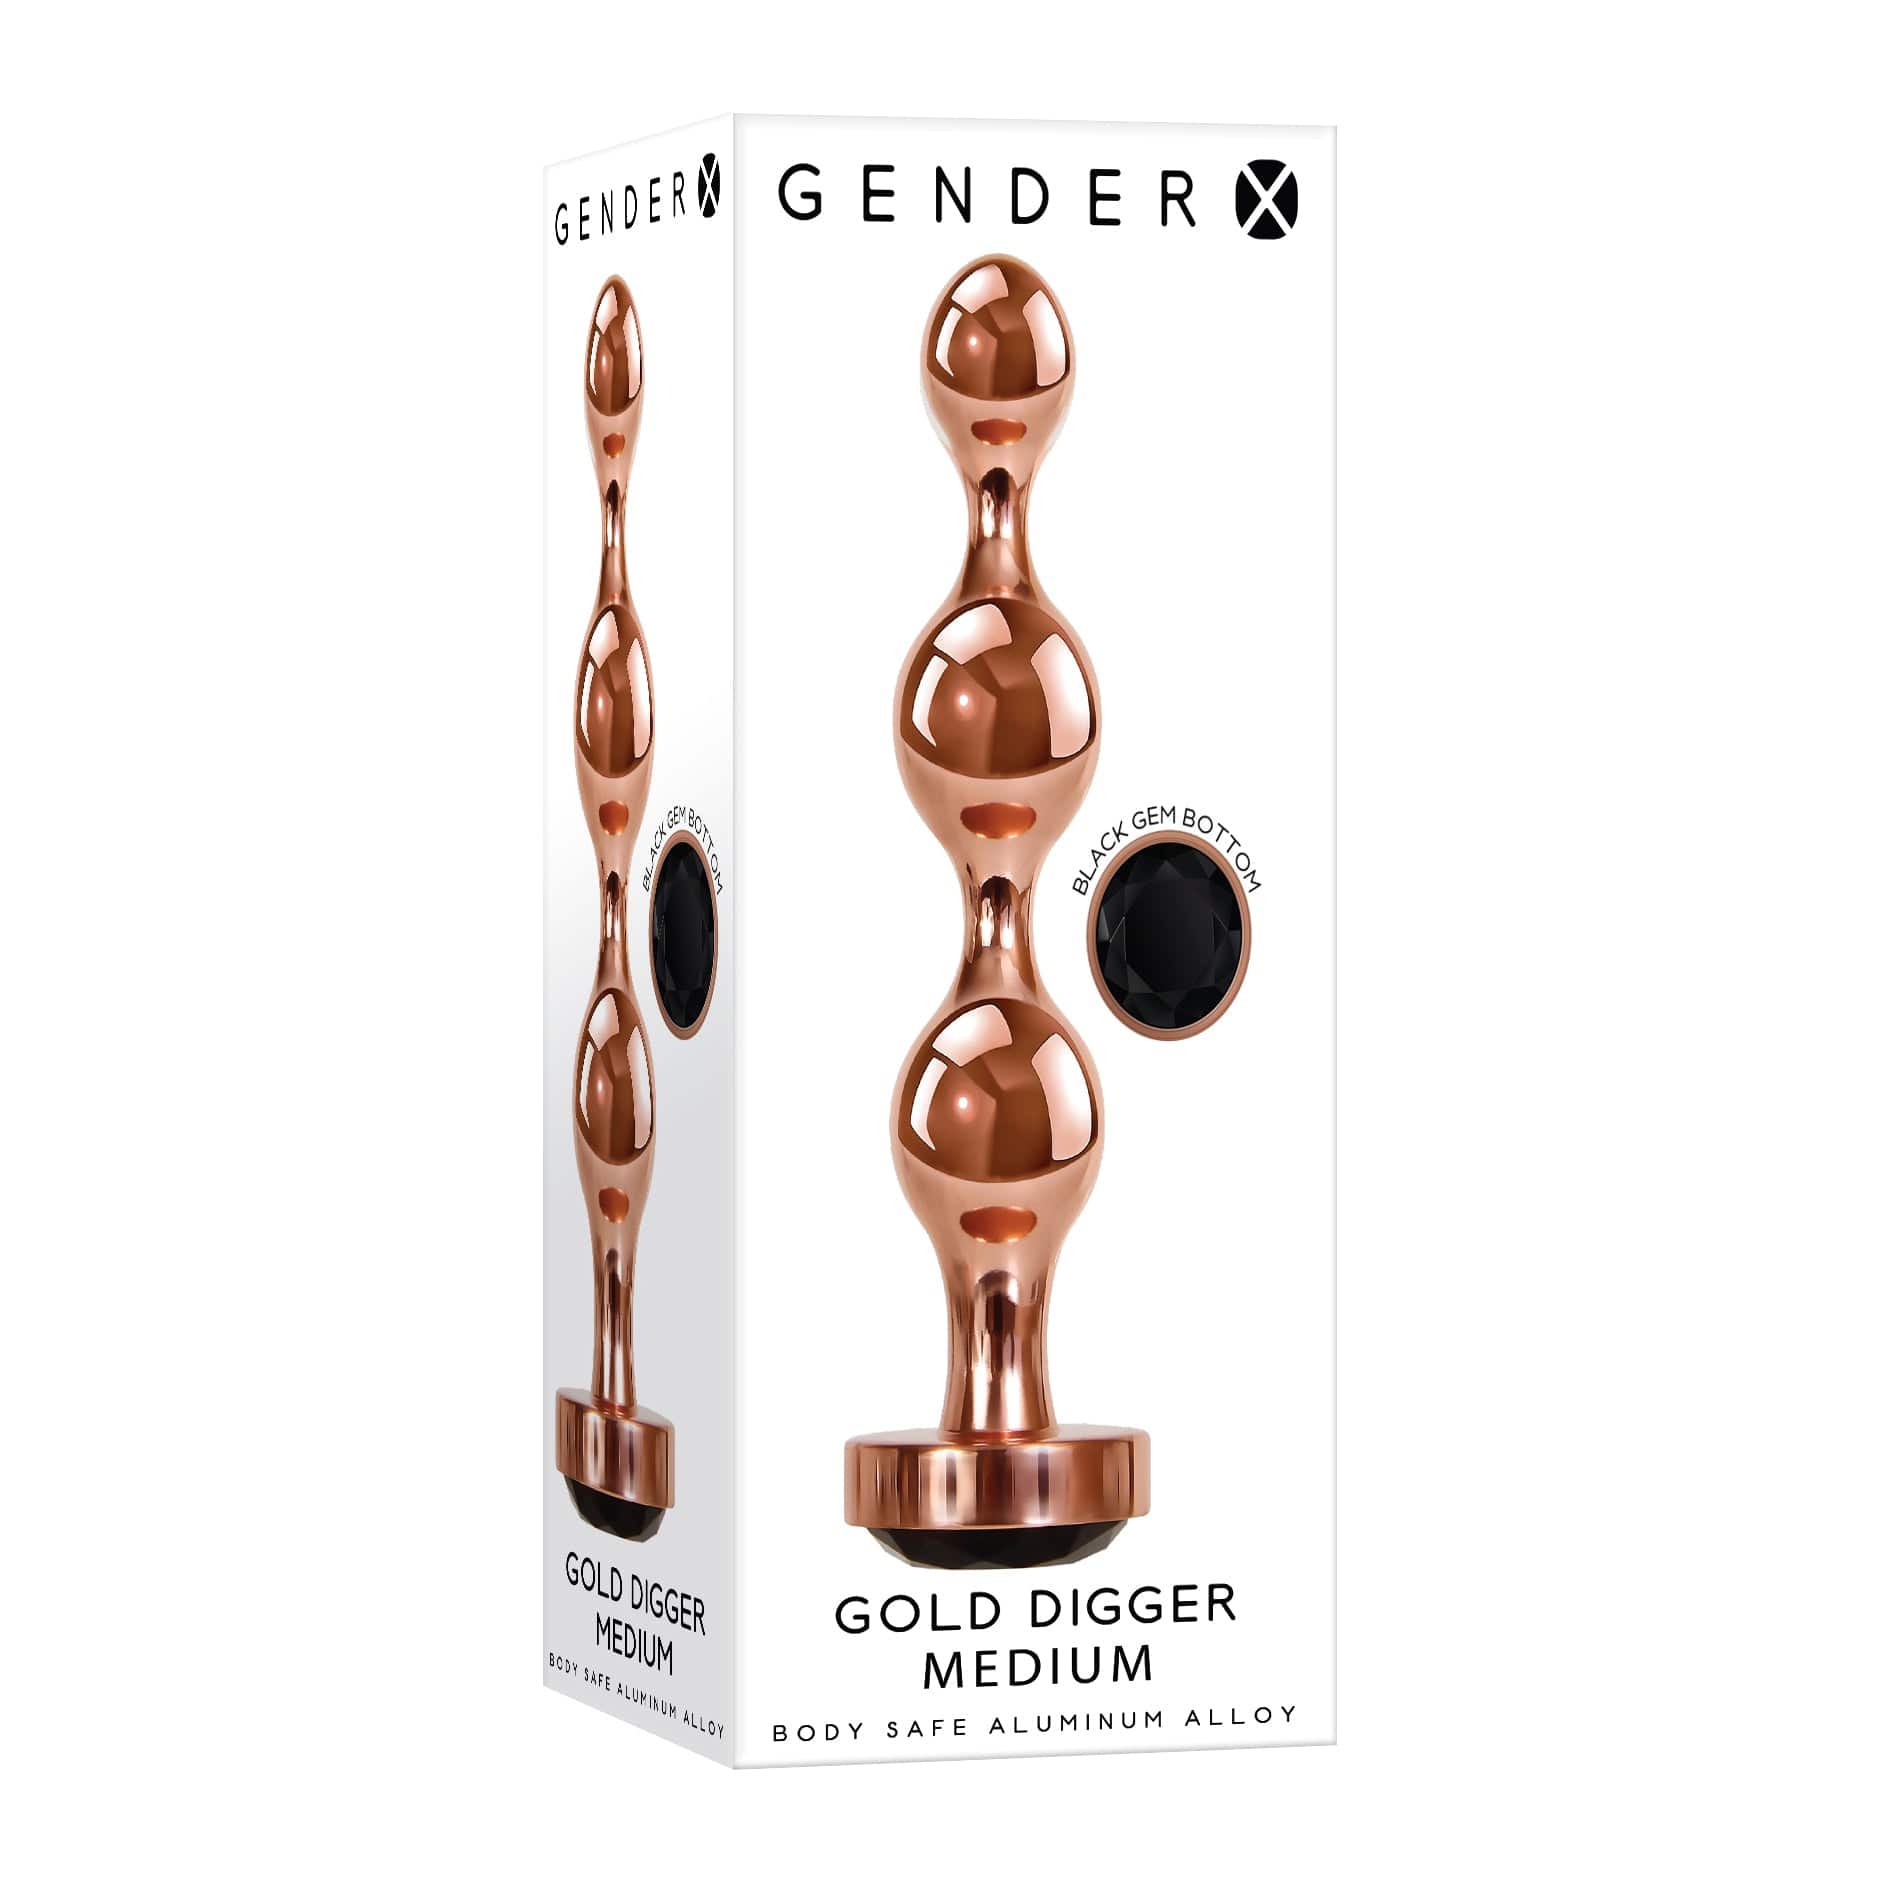 Evolved - Gender X Gold Digger Anal Beads Medium (Gold) Anal Beads (Non Vibration) 844477019130 CherryAffairs